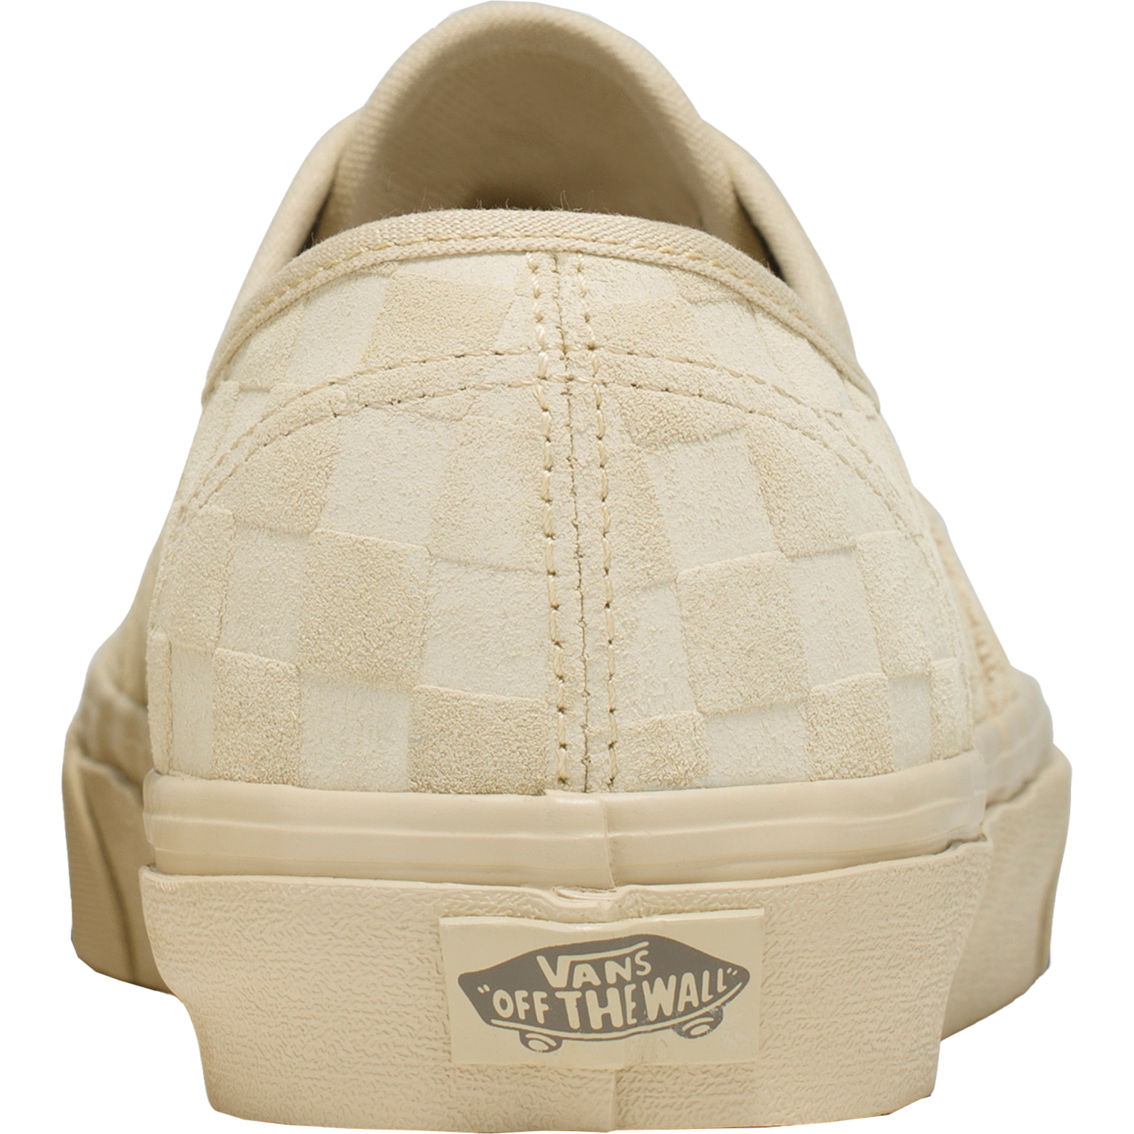 Vans Men's Authentic Mono Sneakers Checkerboard Tan - Image 4 of 4